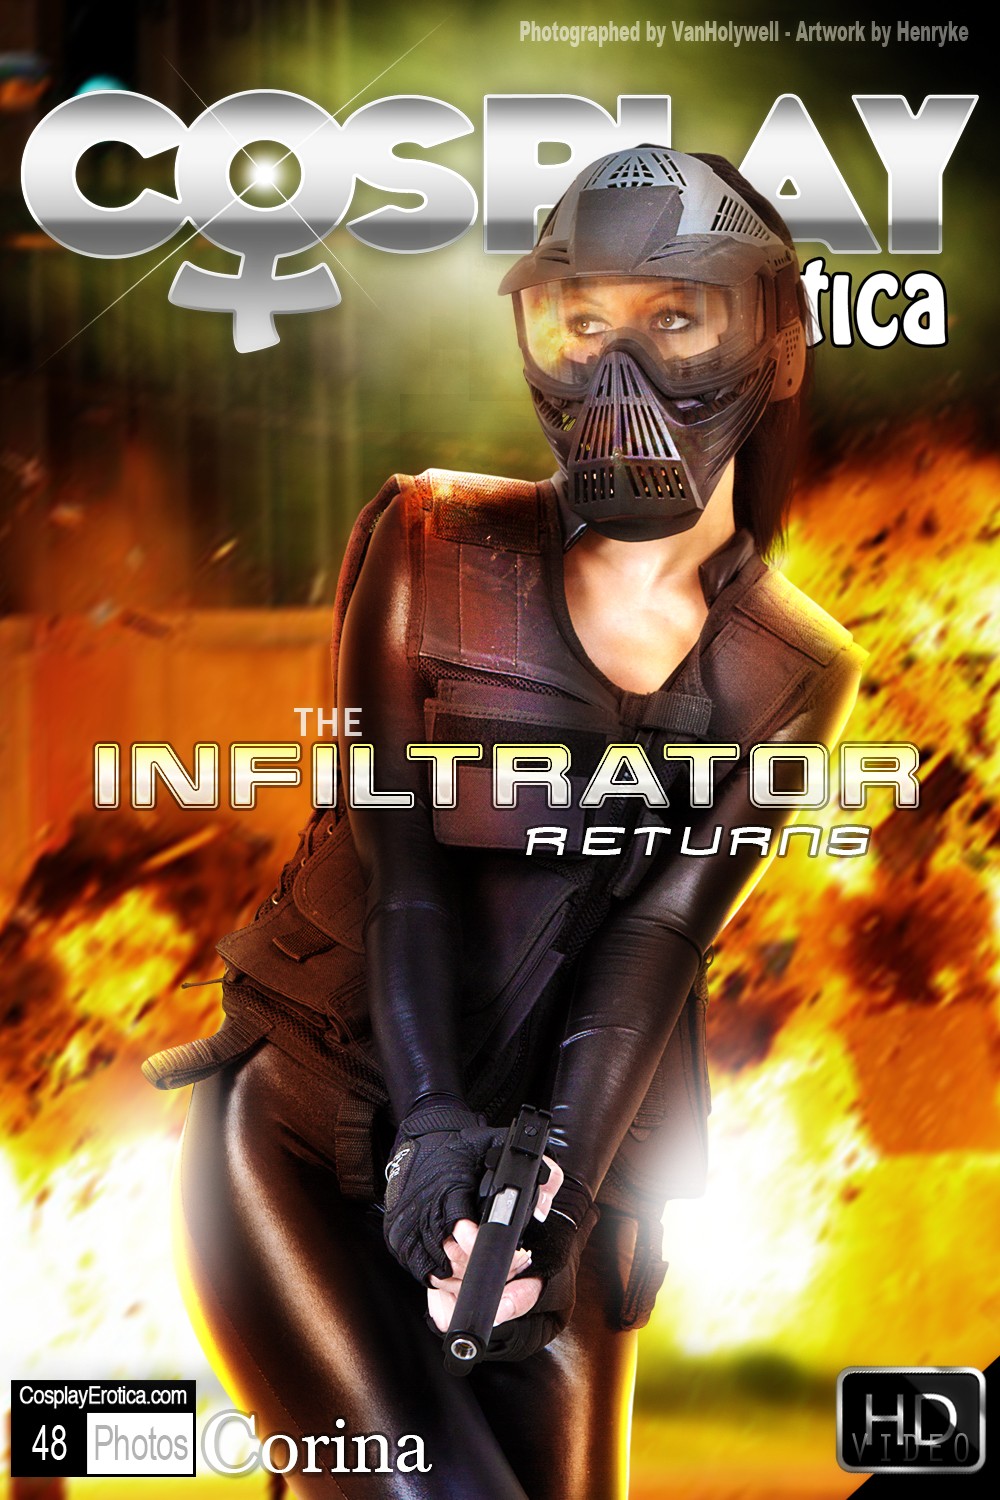 CP-2014-08-14 - Corina - The Infiltrator Returns 15 (1).jpg